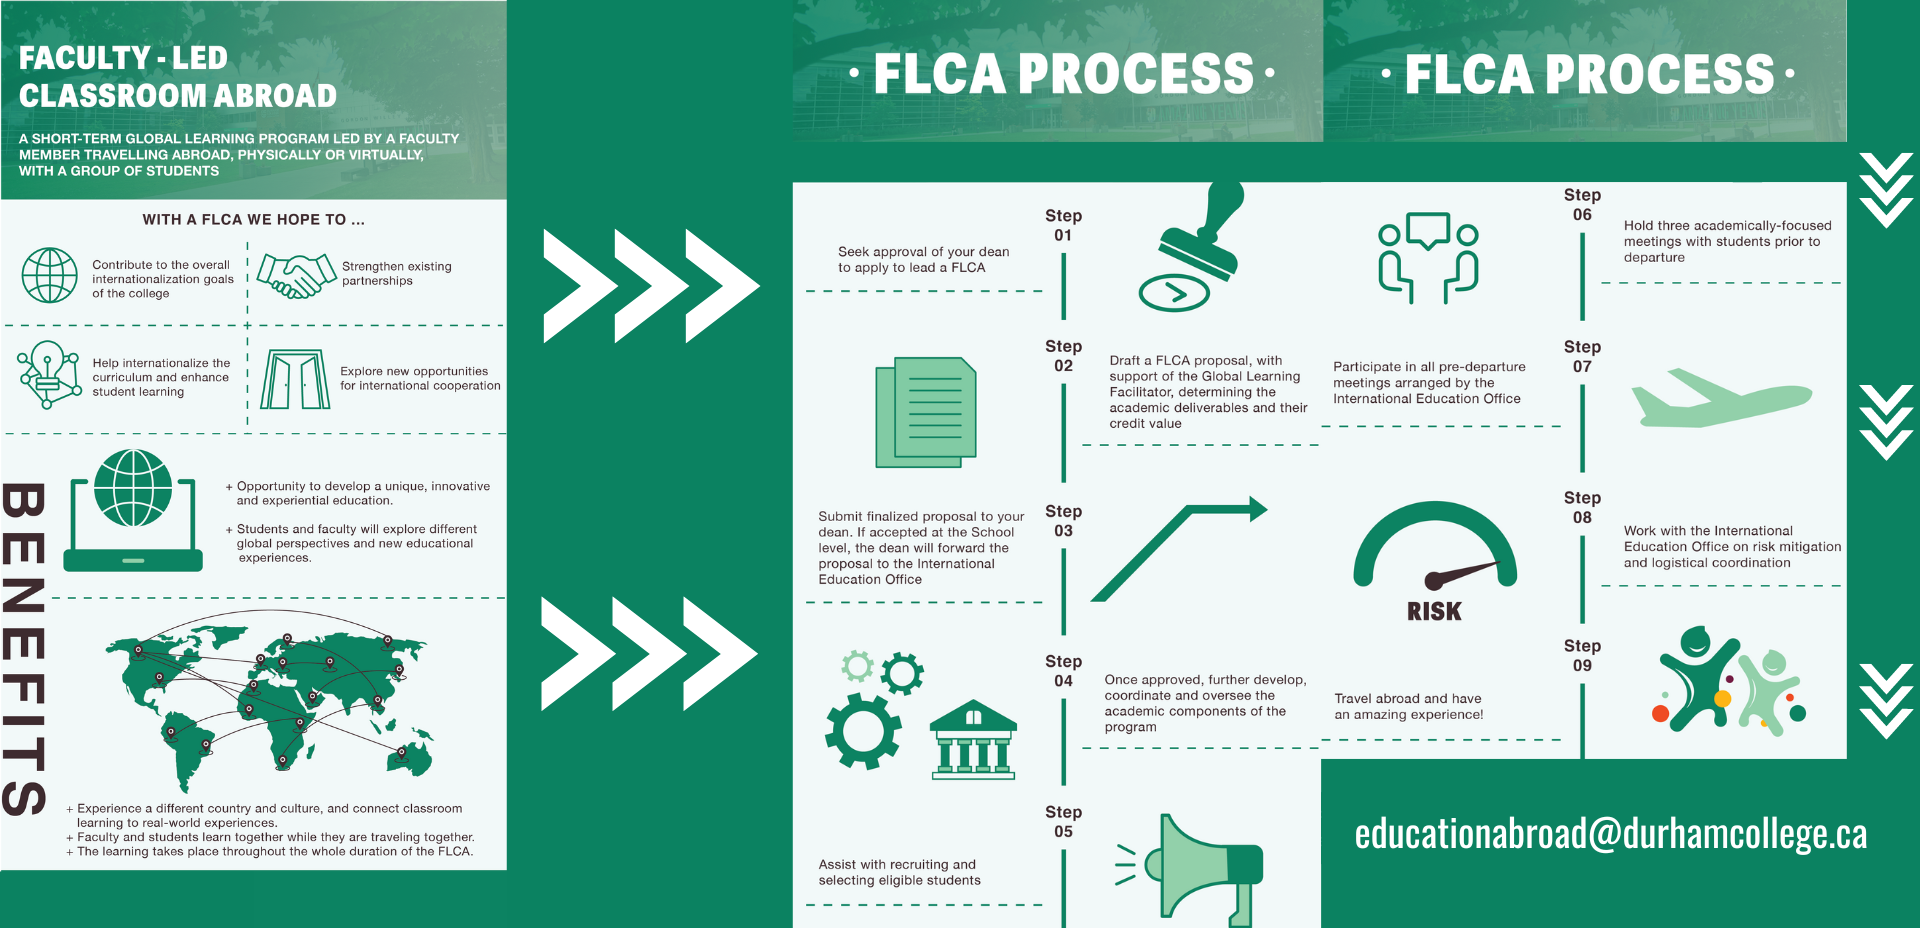 FLCA processes infographic